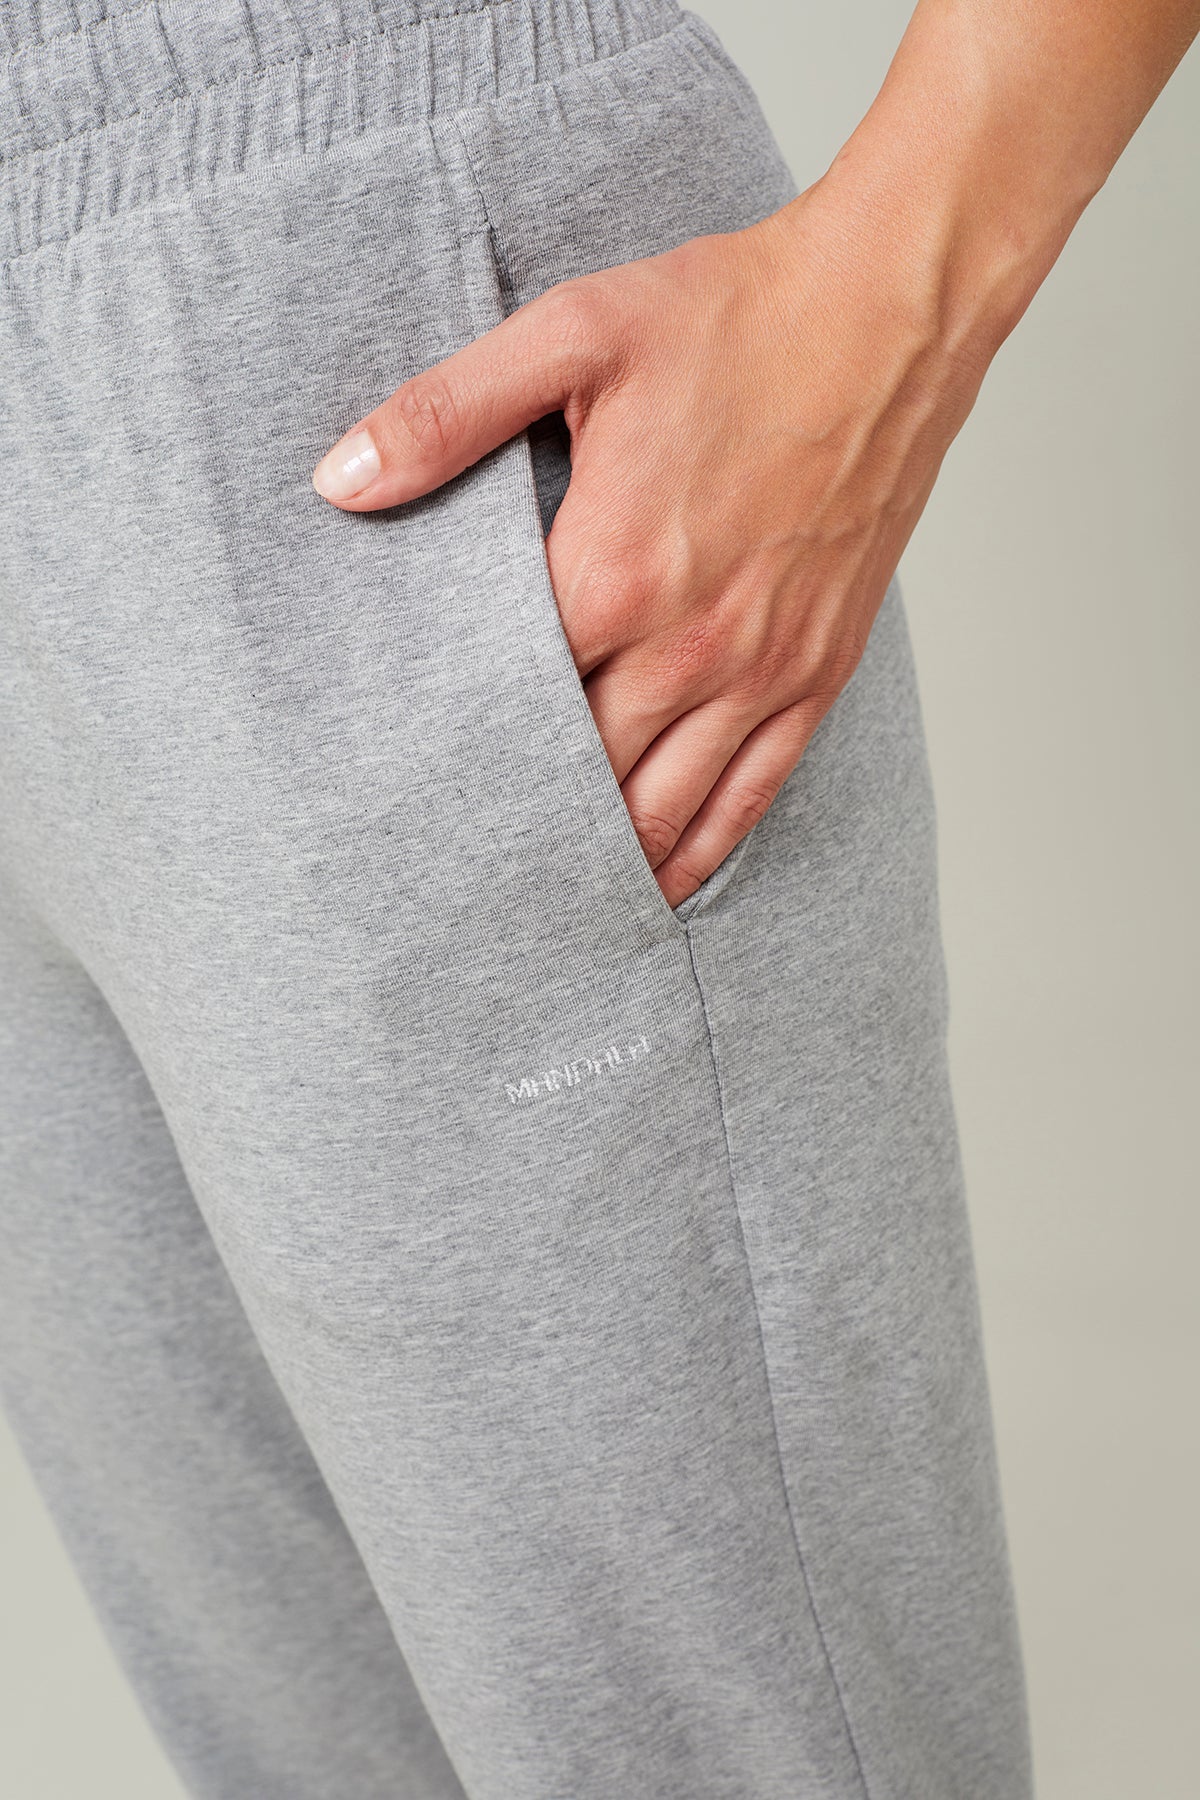 Mandala Yoga Pant Grau Detail - Cuffed Track Pants